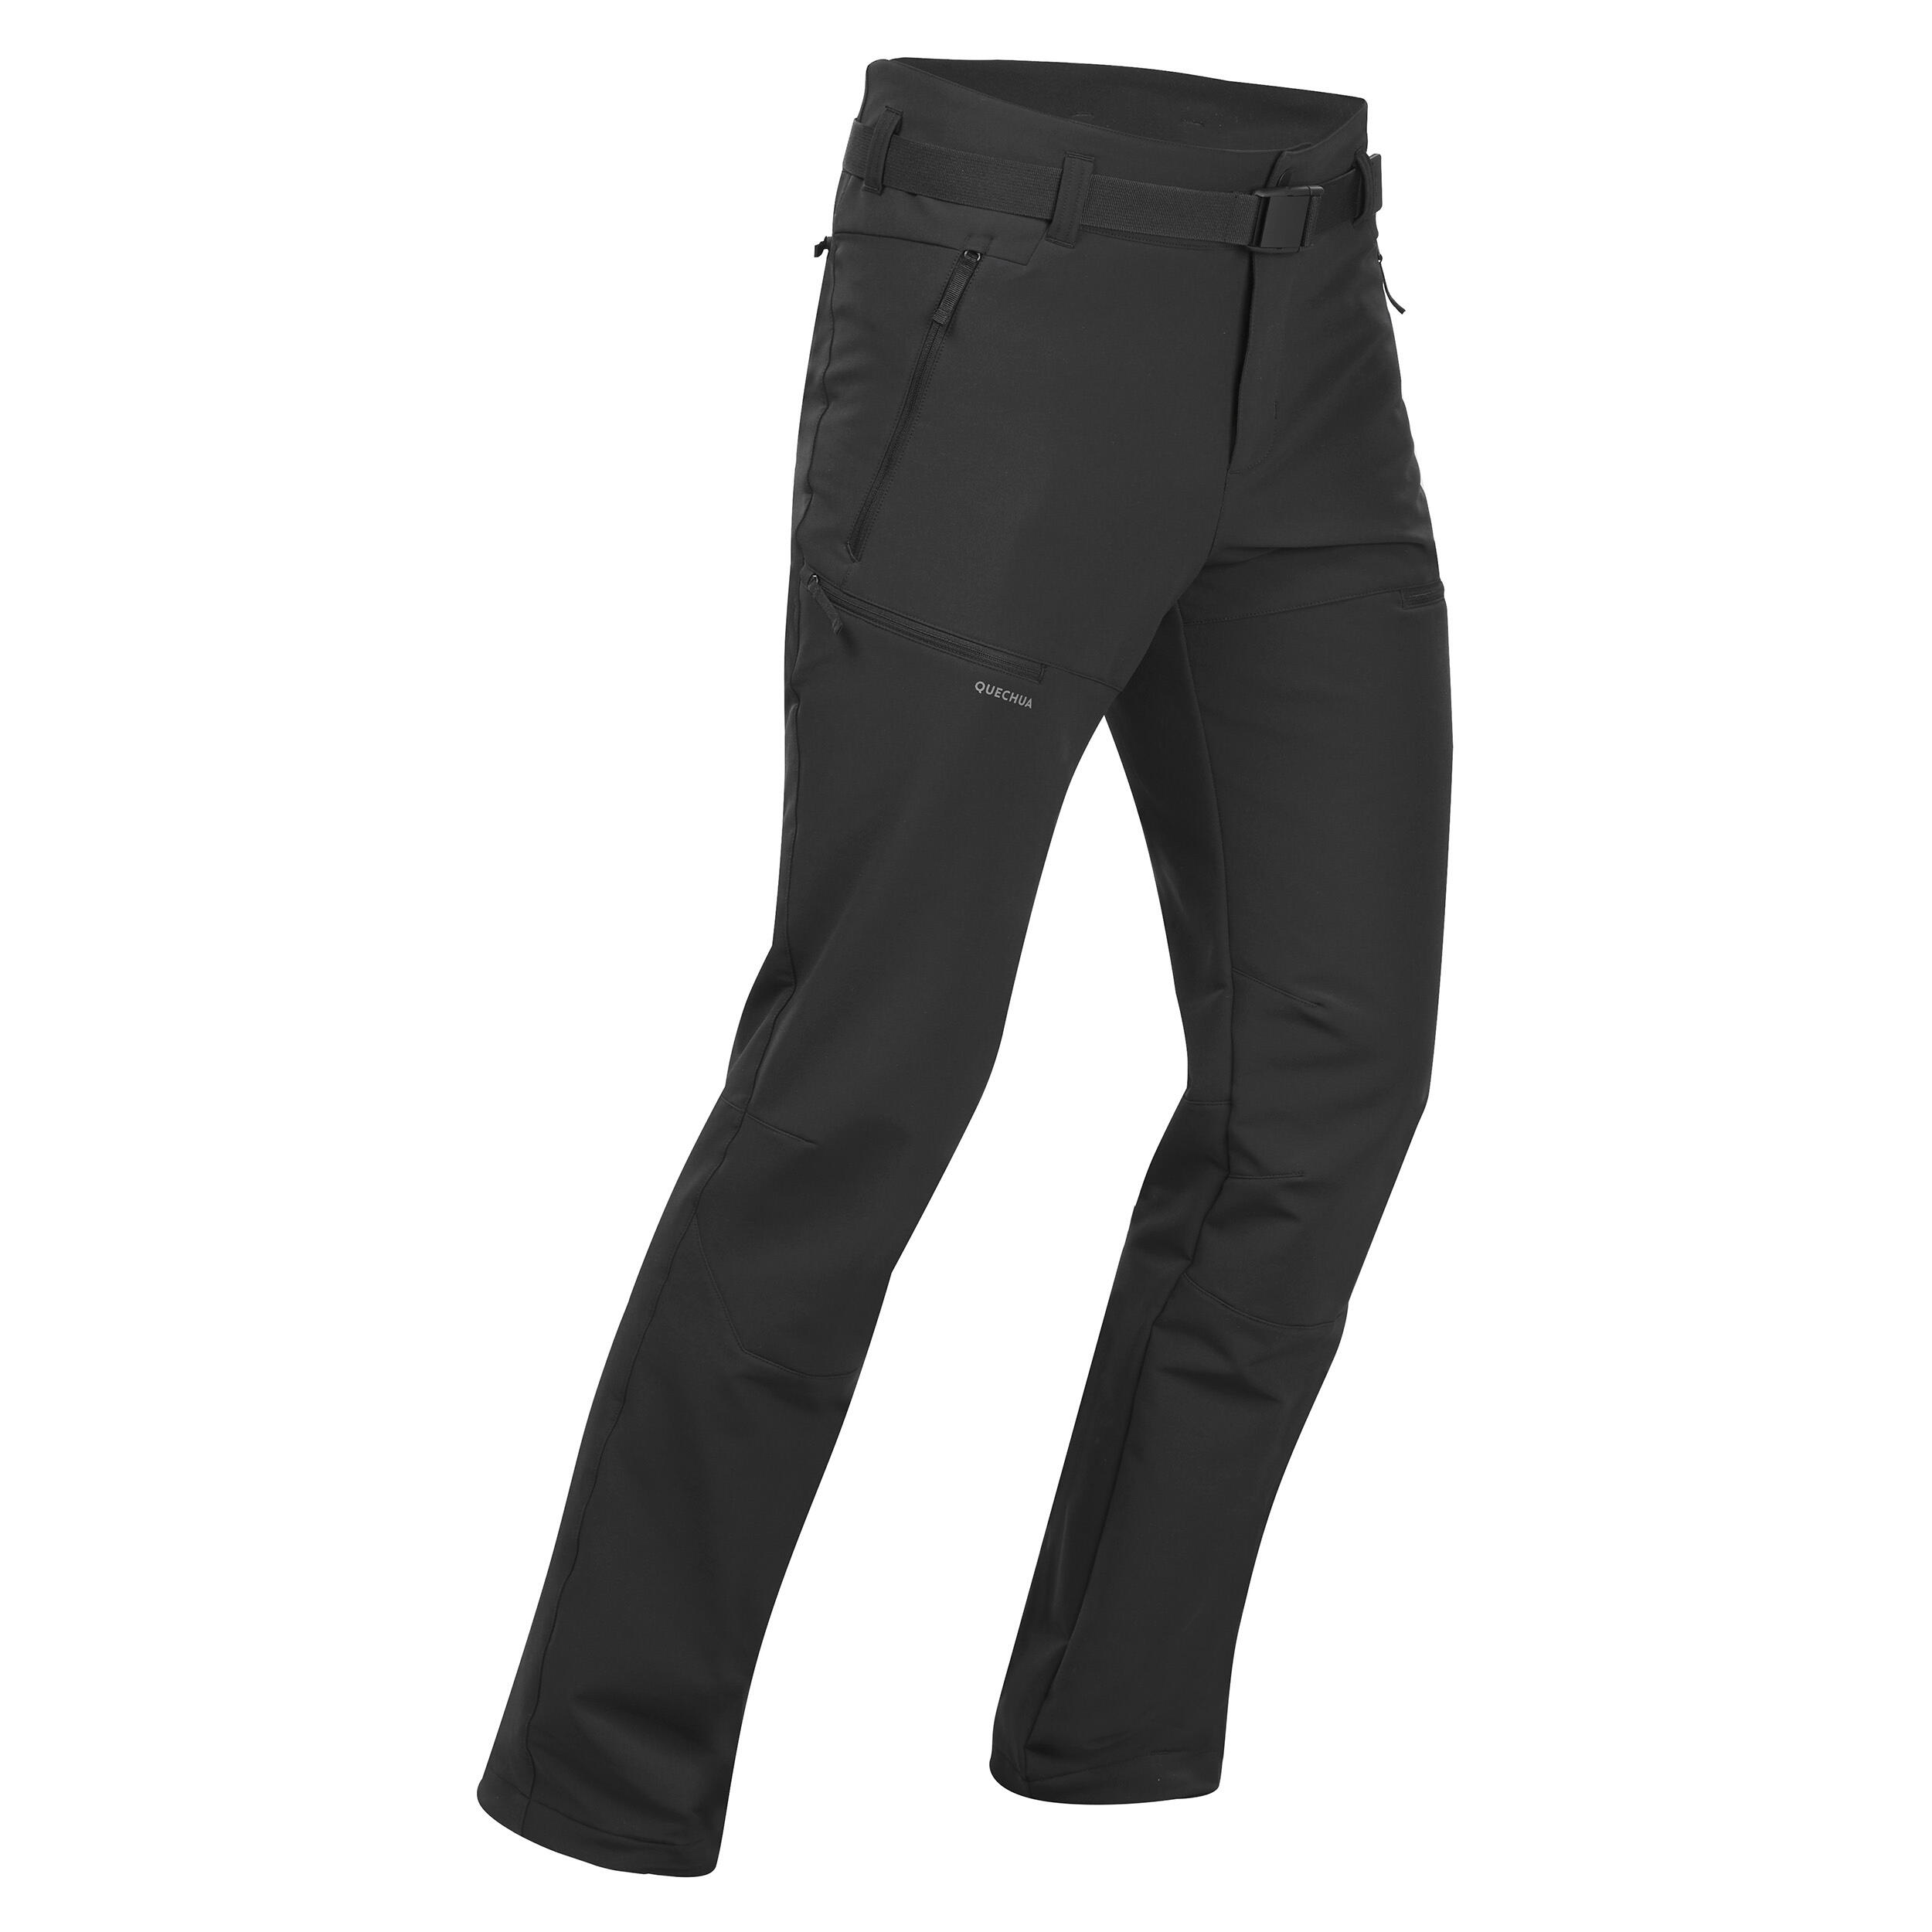 Decathlon trouser| Men's Breathable Trousers Pants SG-500 Khaki | Decathlon  cargo pant - YouTube